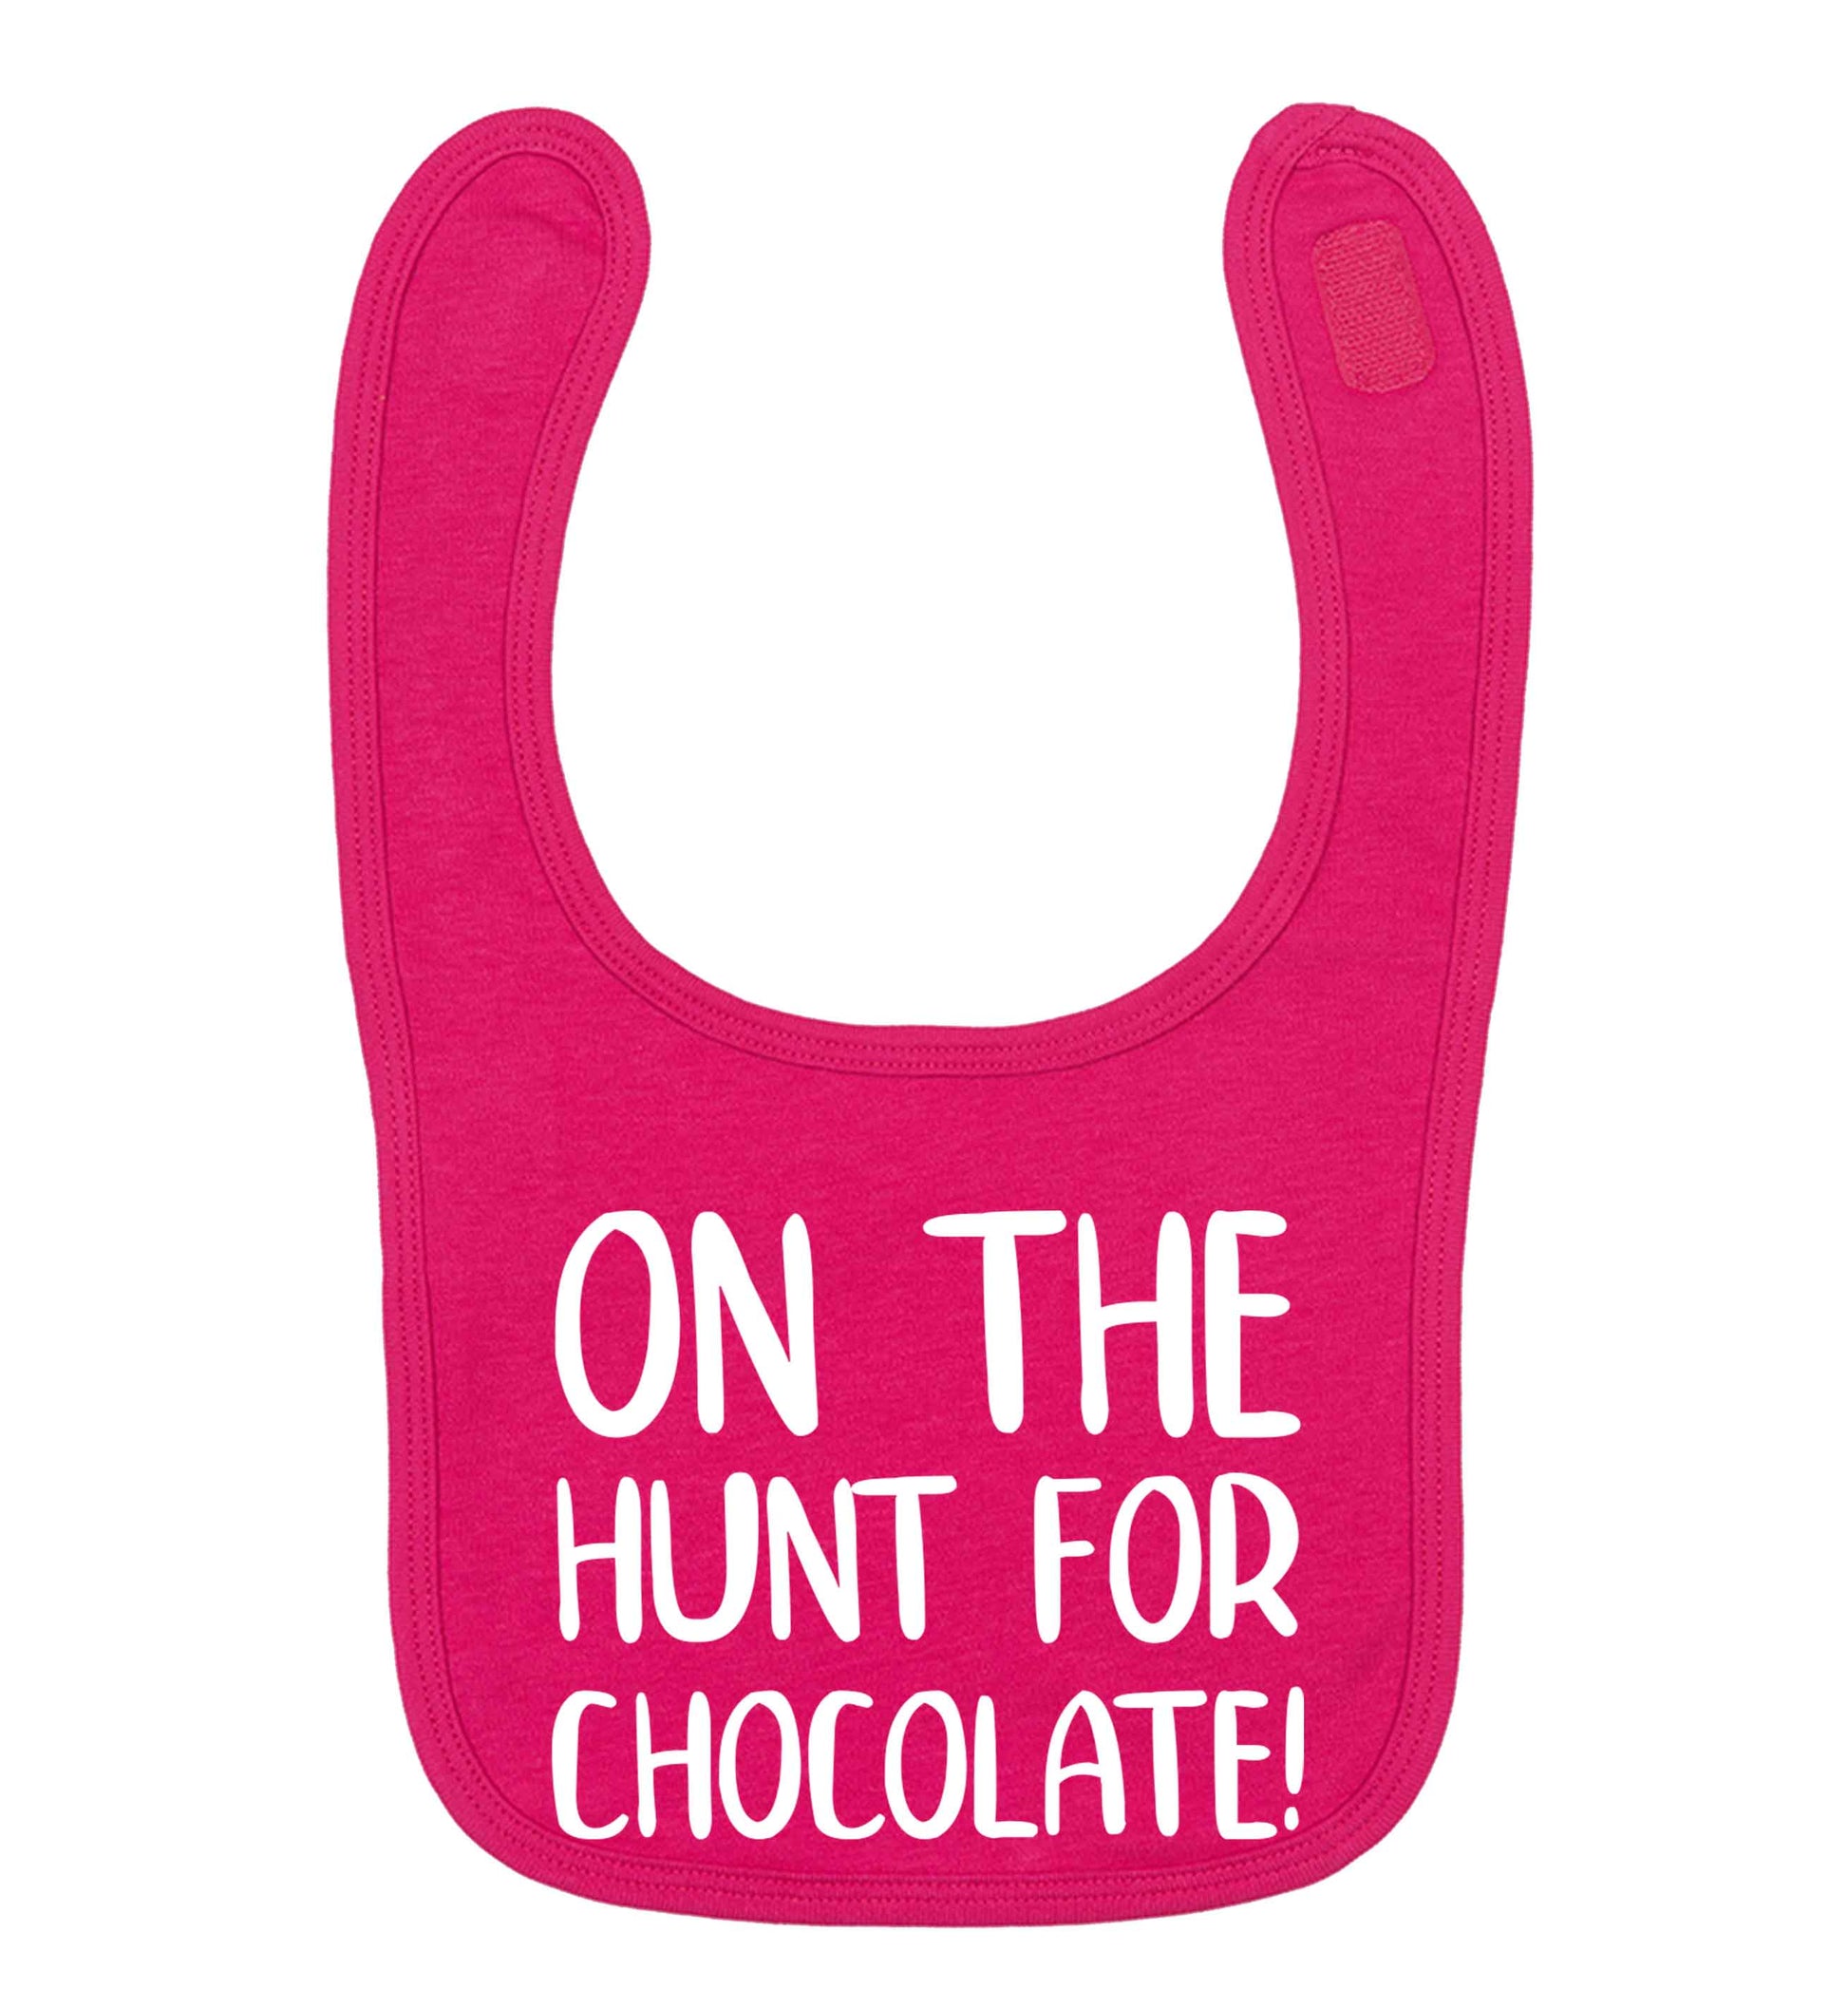 On the hunt for chocolate! dark pink baby bib